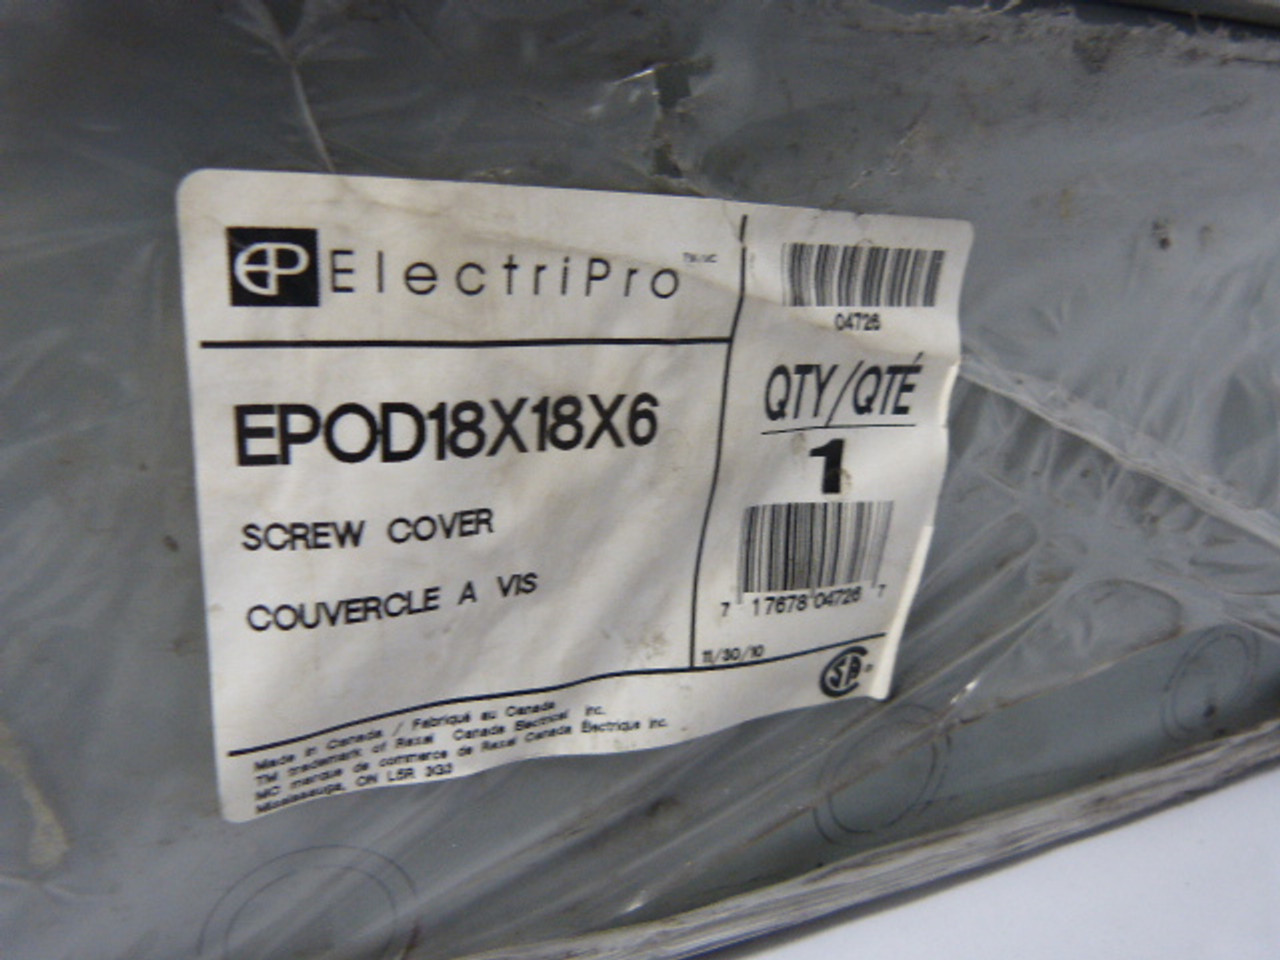 Electripro EPOD18X18X6 Screw Cover Junction Box ! NWB !